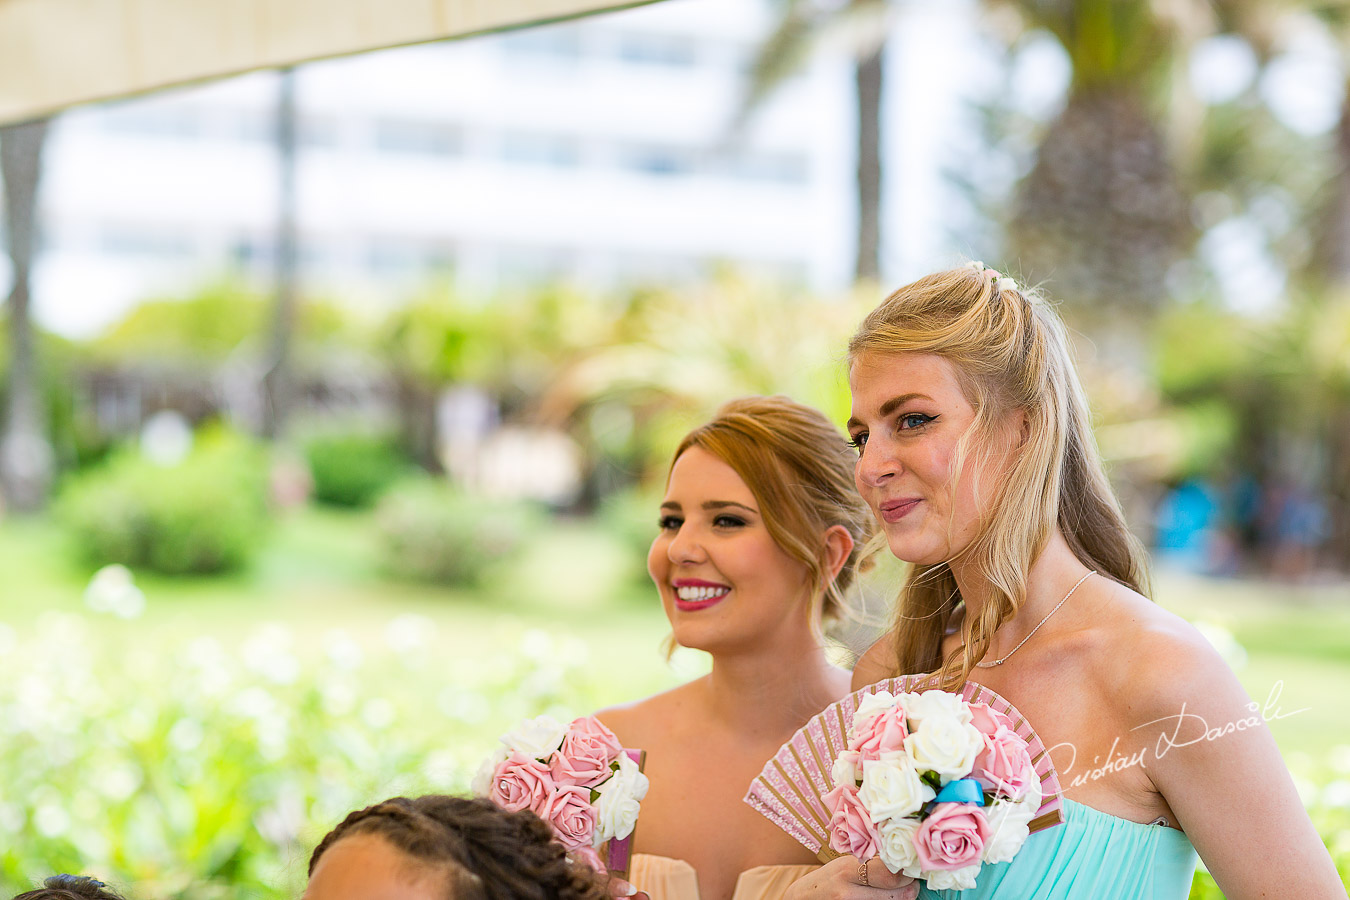 Bridesmaids photographed at Nissi Beach Resort in Ayia Napa, Cyprus by Cristian Dascalu.